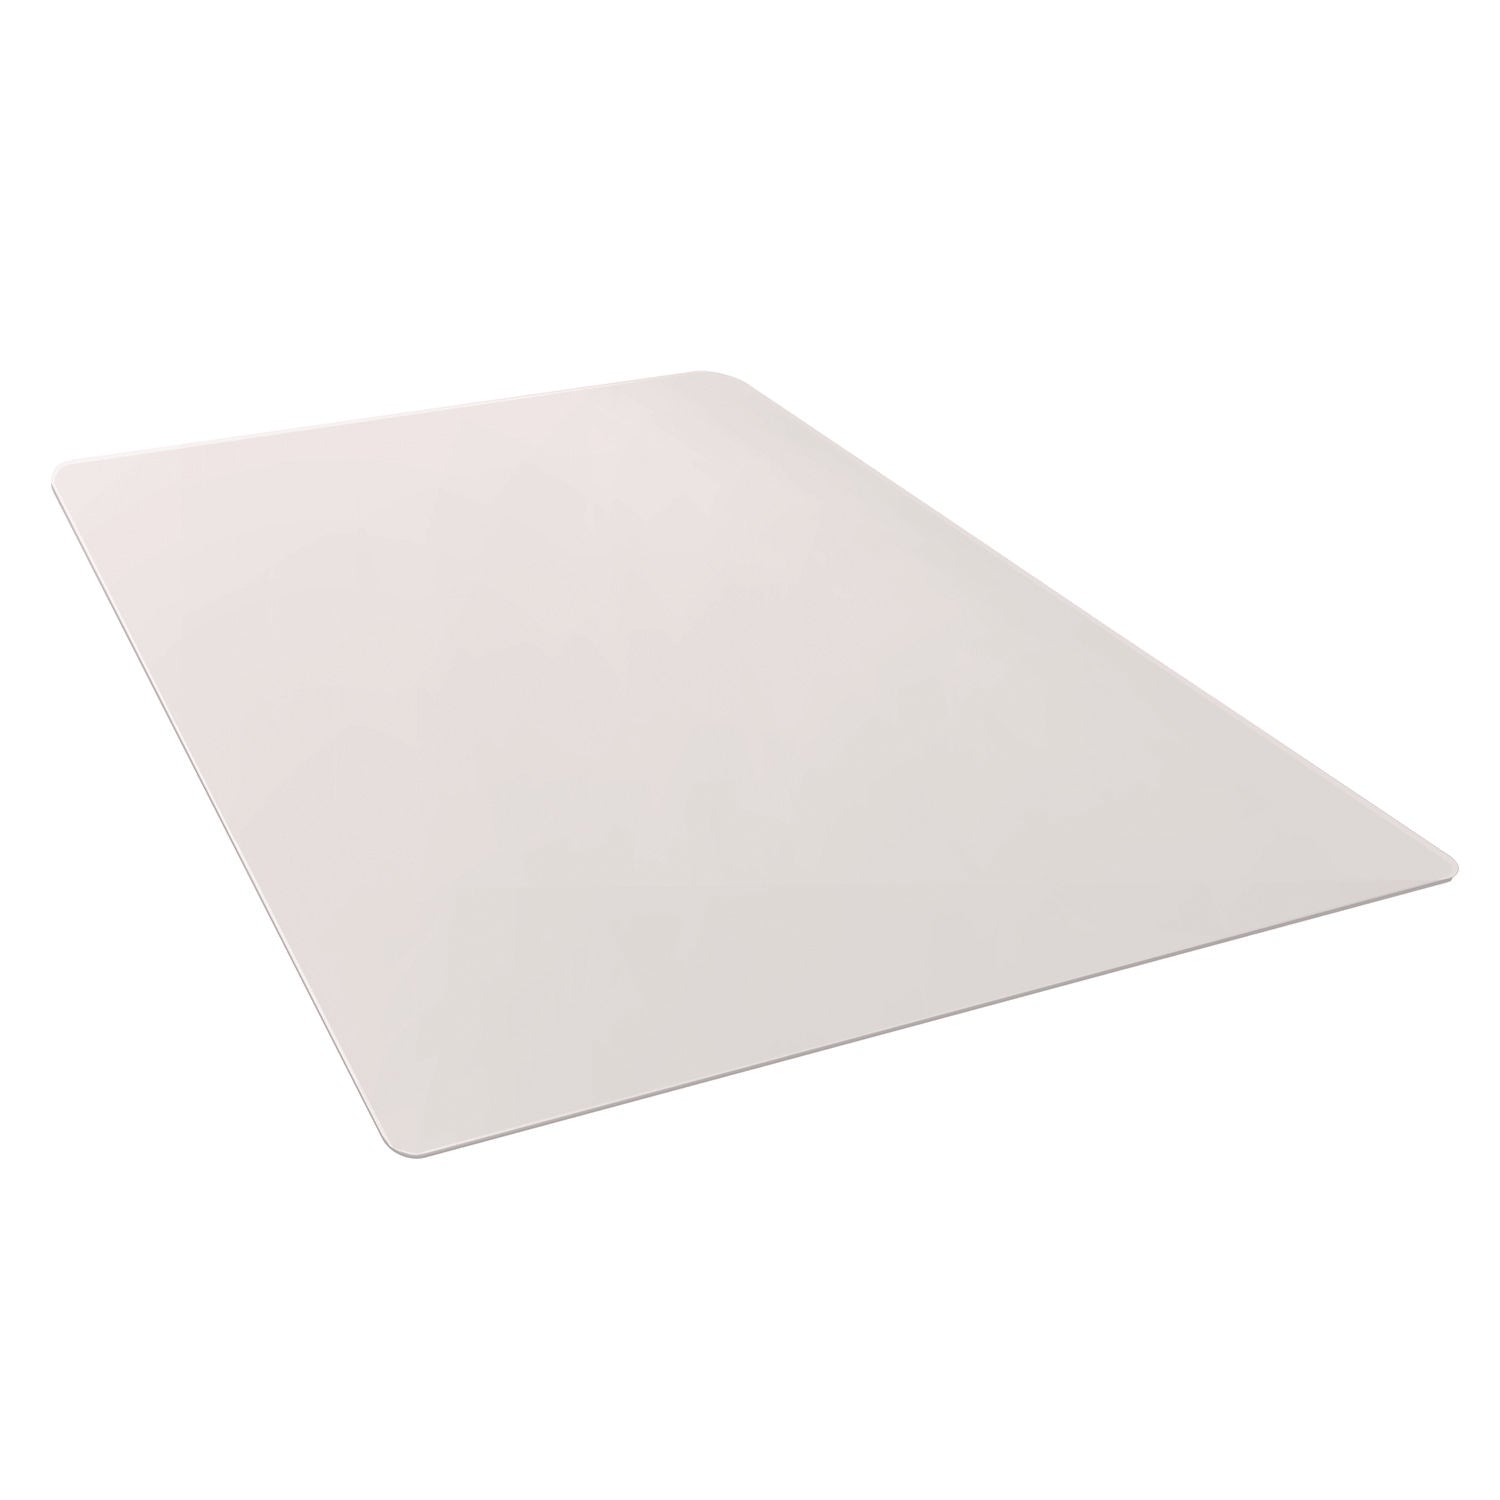 ecotex-marlon-bioplus-rectangular-polycarbonate-chair-mat-for-hard-floors-rectangular-46-x-60-clear_flrnrcmflbs0004 - 4